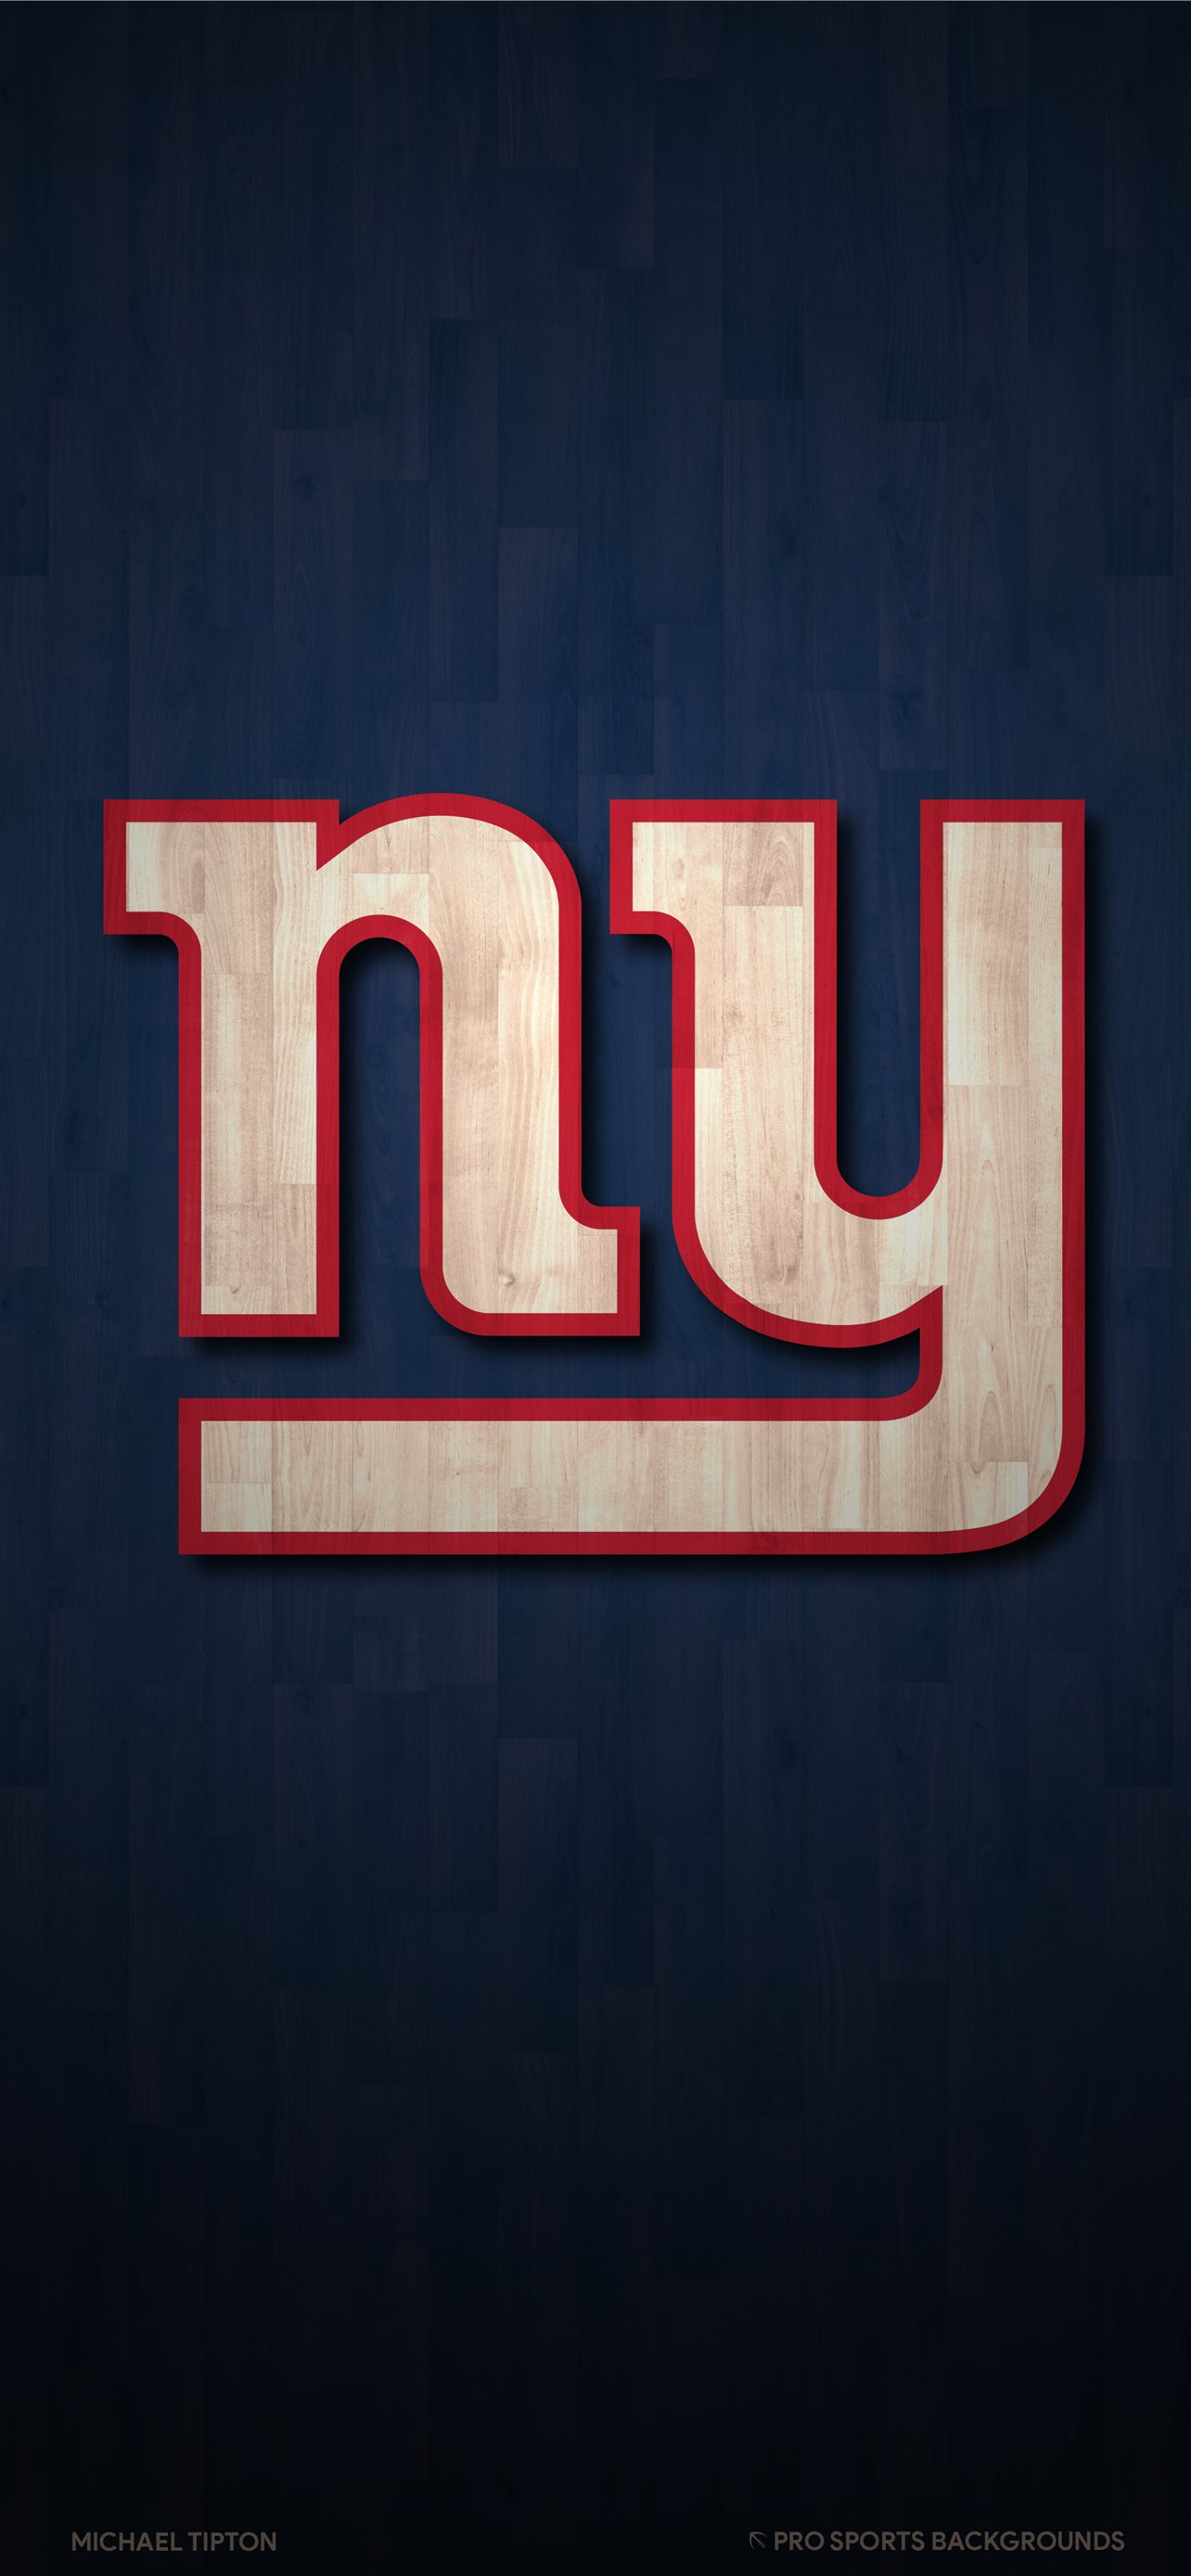 Best New York Giants Iphone Hd Wallpapers Ilikewallpaper